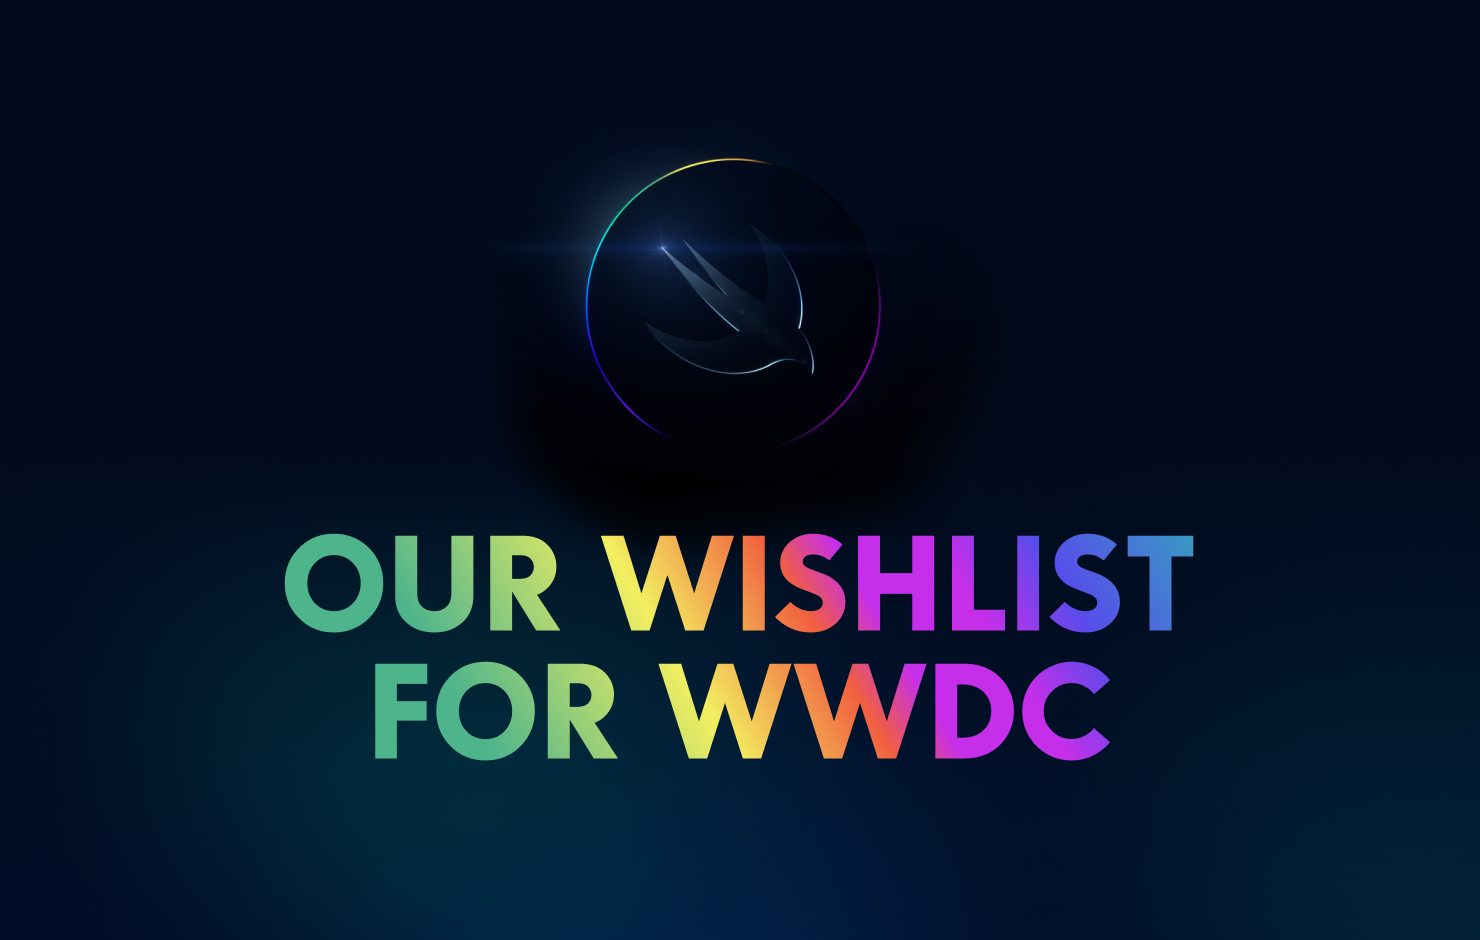 Our Wishlist for WWDC